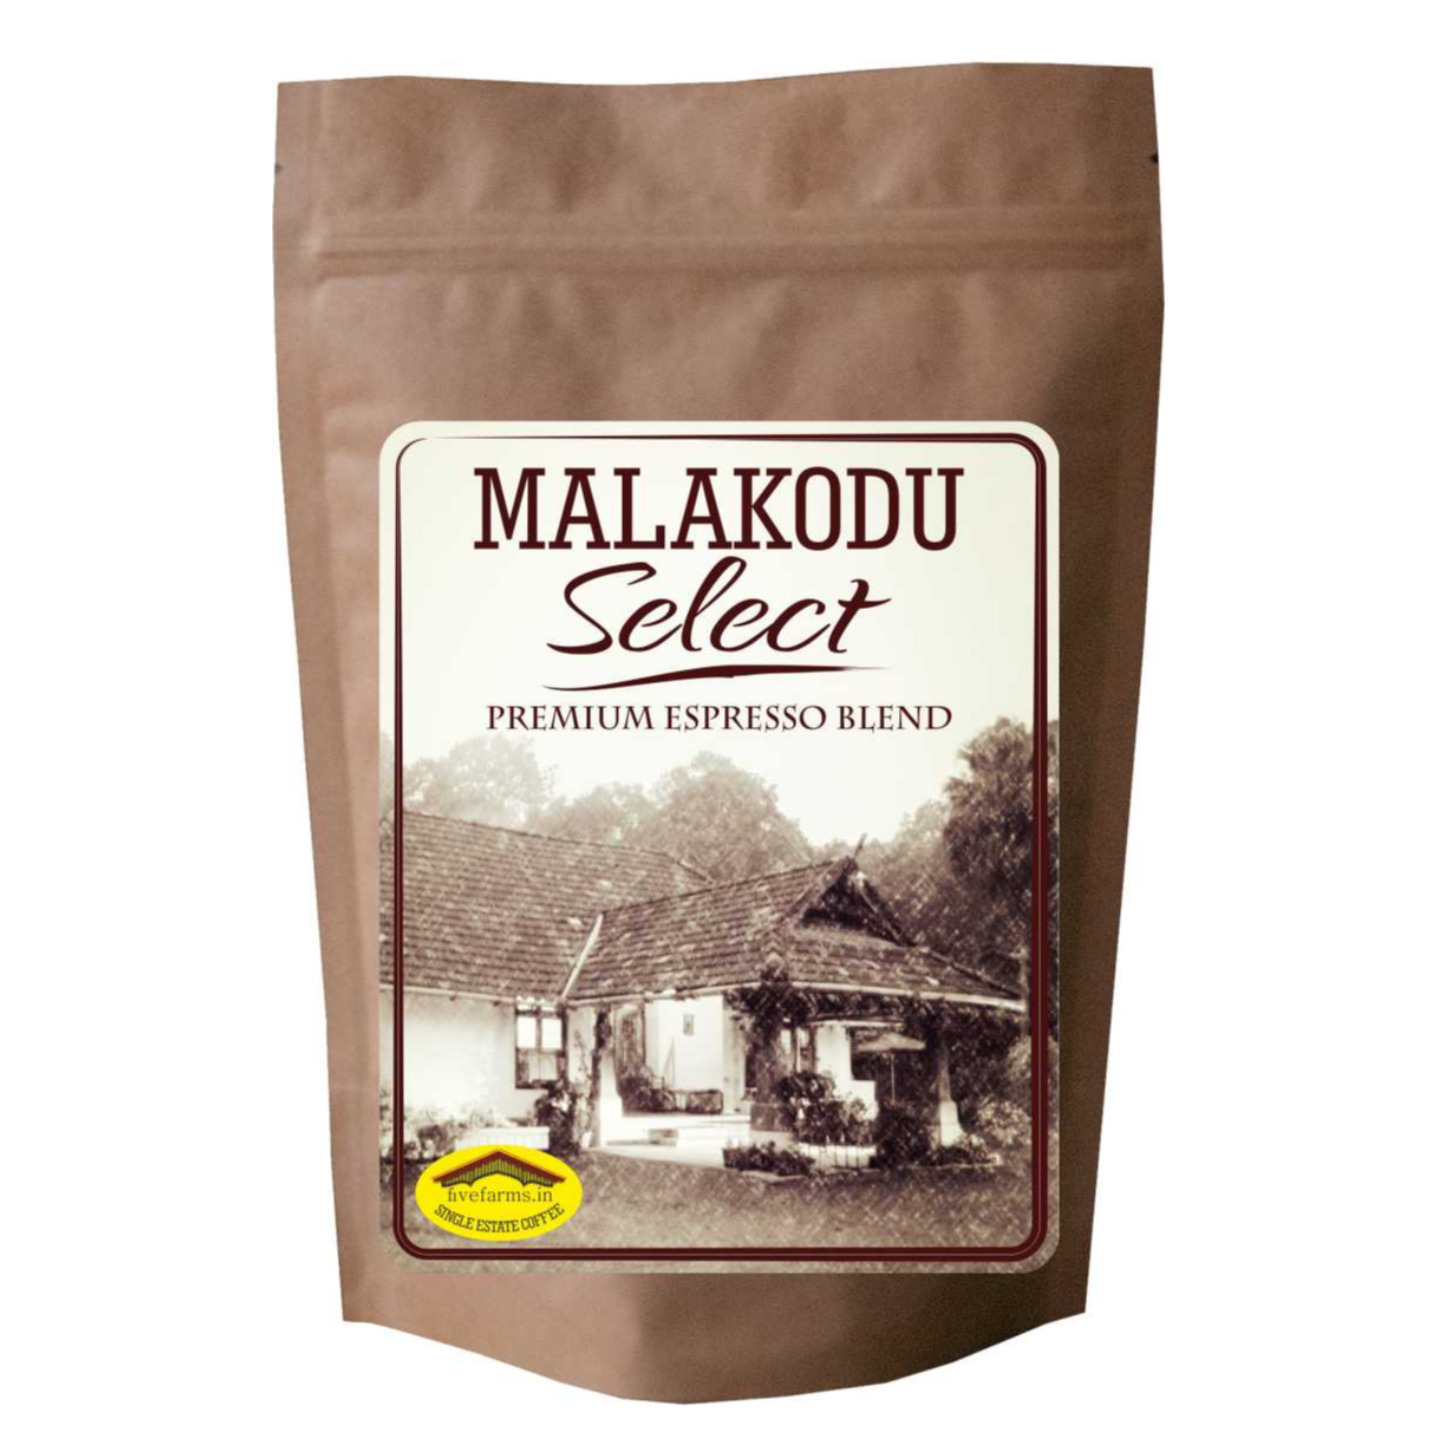 Malakodu Select - Premium Espresso Blend 200gms.